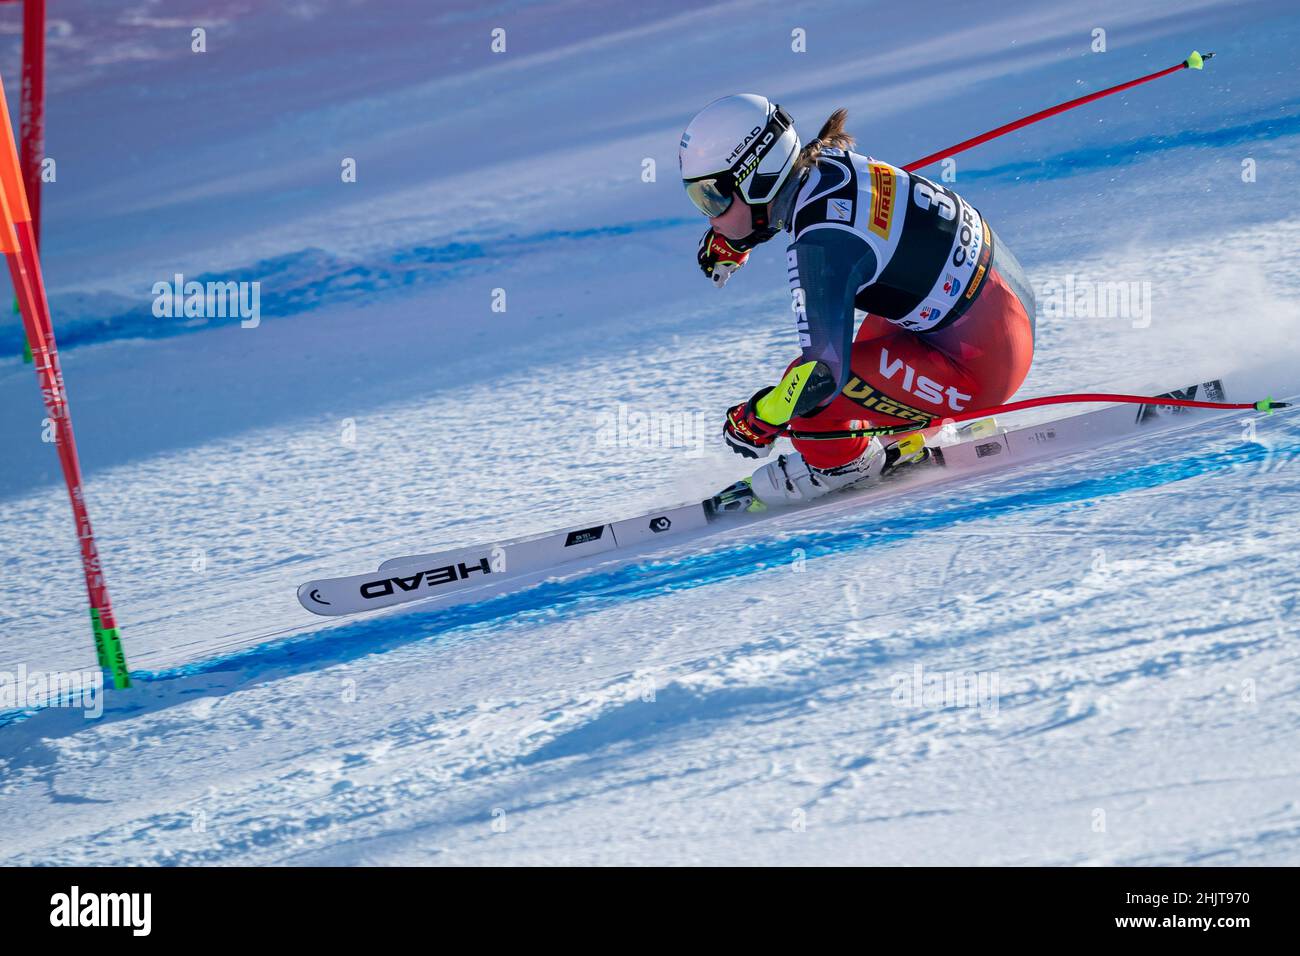 Cortina d'Ampezzo, Italy. 23 January 2022. PLESHKOVA Julia (RUS) competing in the Fis Alpine Ski World Cup Women's Super-G on the Olympia delle Tofane Stock Photo